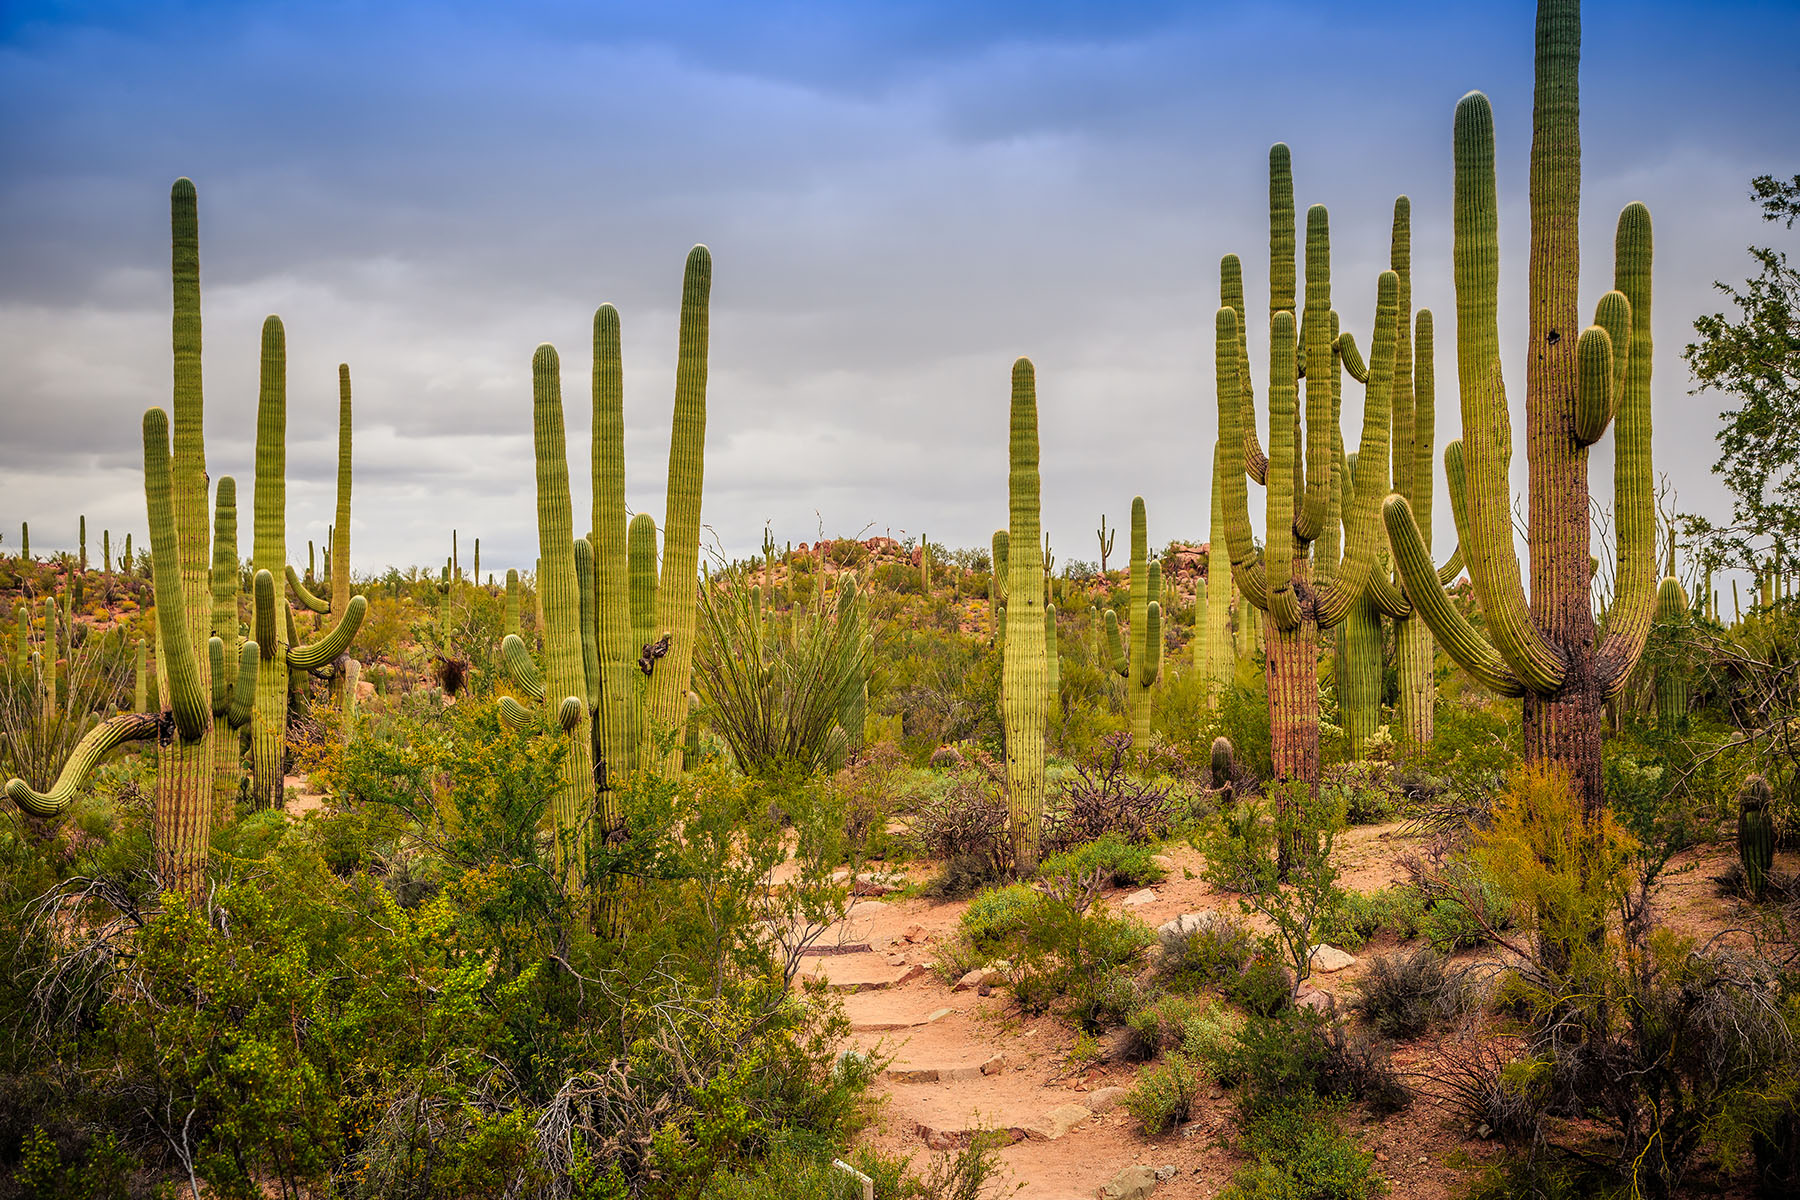 Saguaro National Park cactus field view